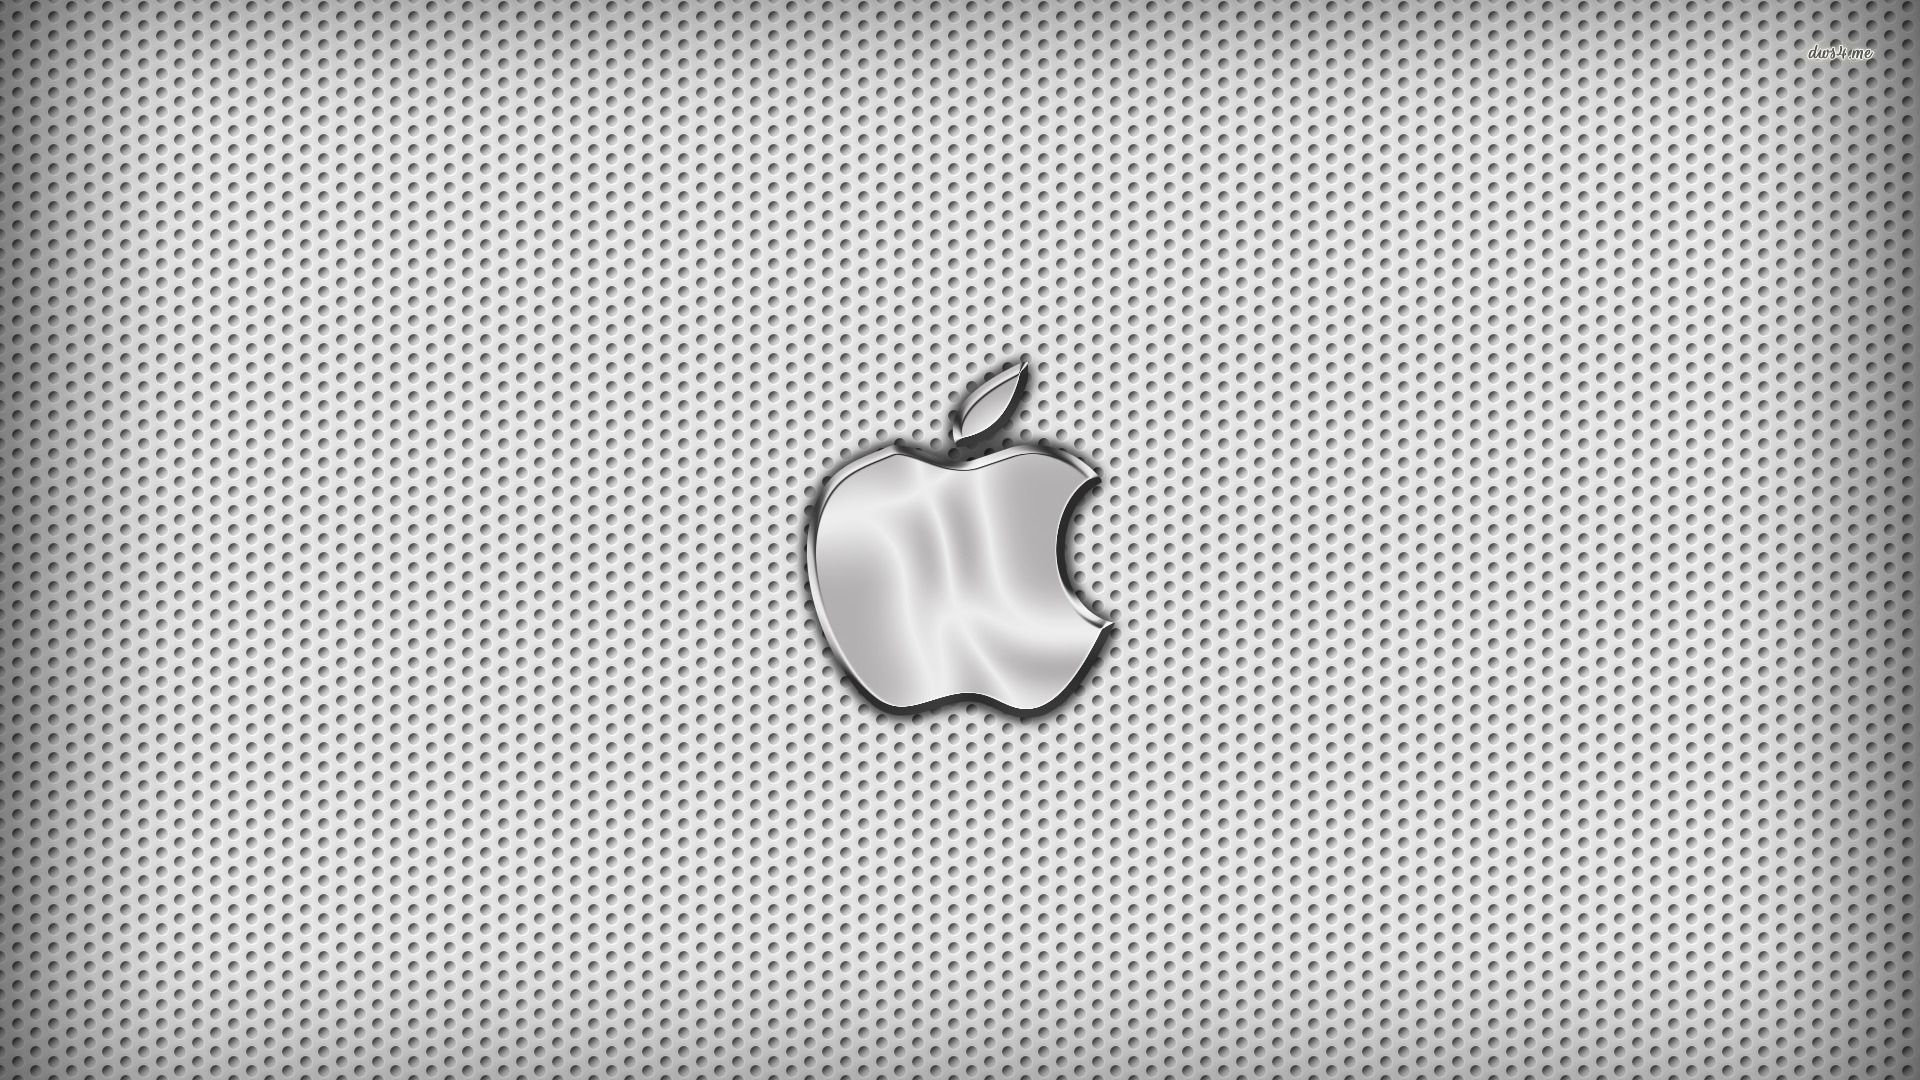 Apple Logo Wallpapers | Download Free Desktop Wallpaper Images ...